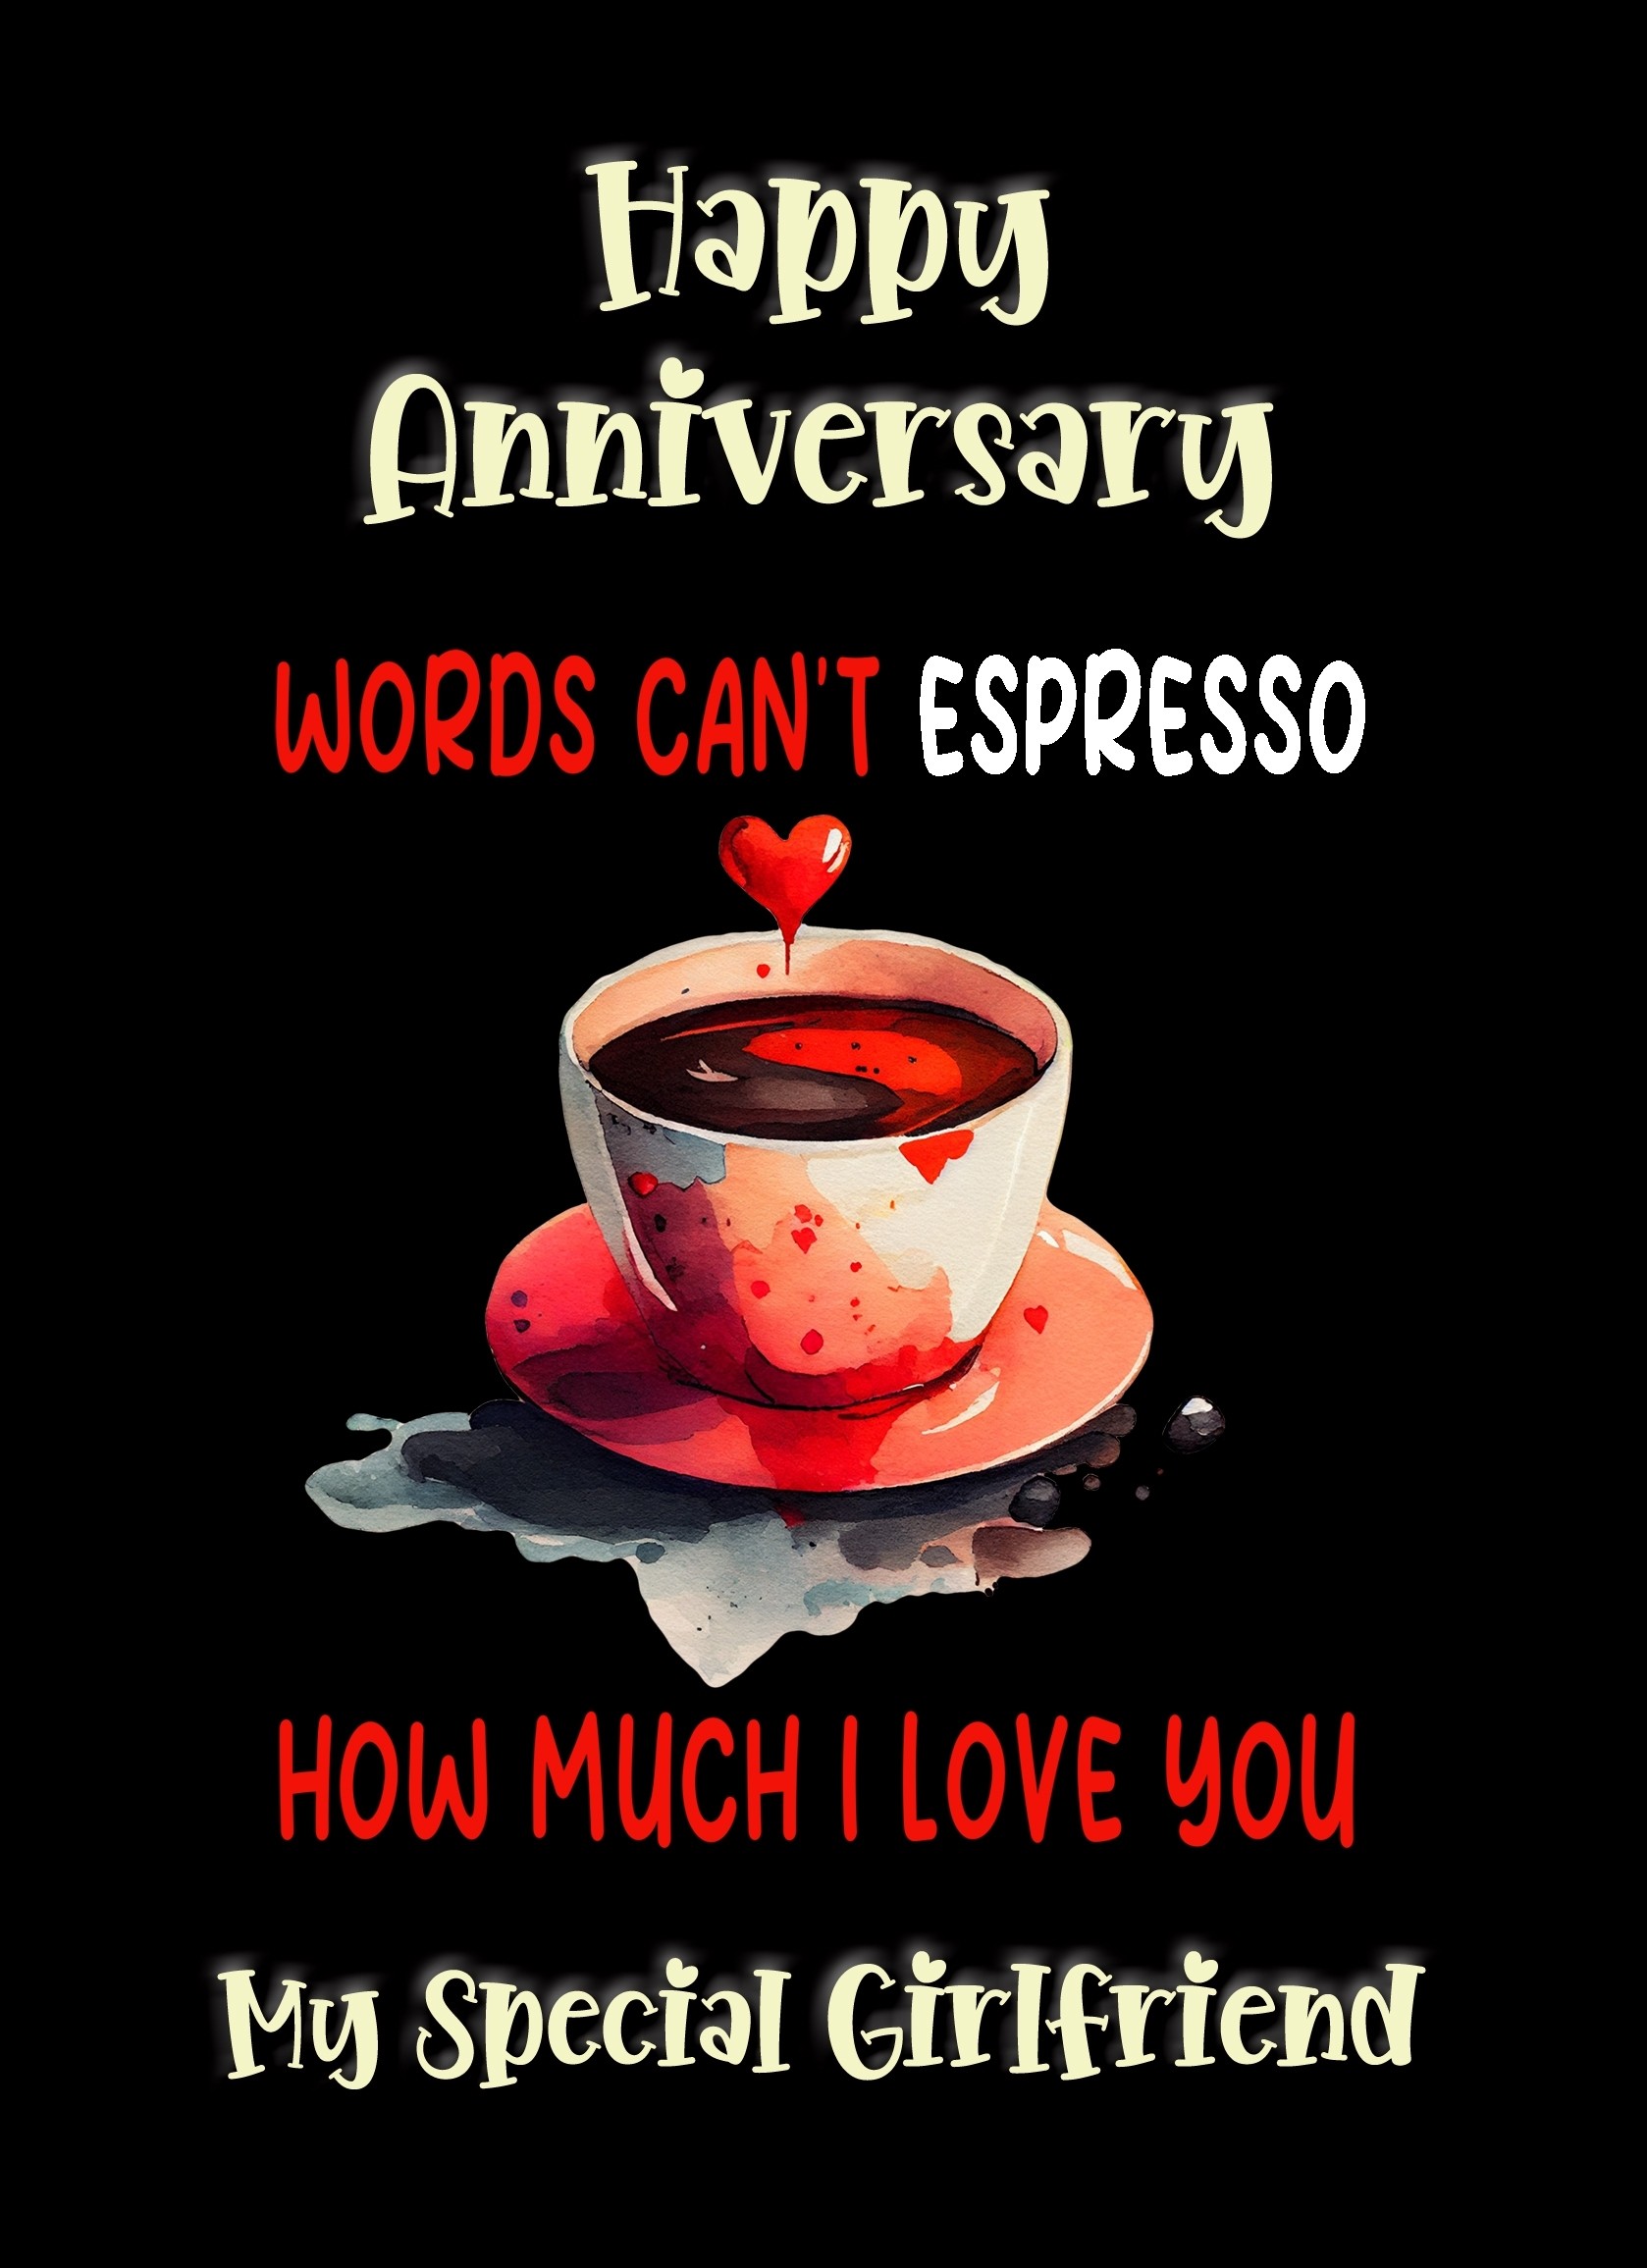 Funny Pun Romantic Anniversary Card for Girlfriend (Can't Espresso)